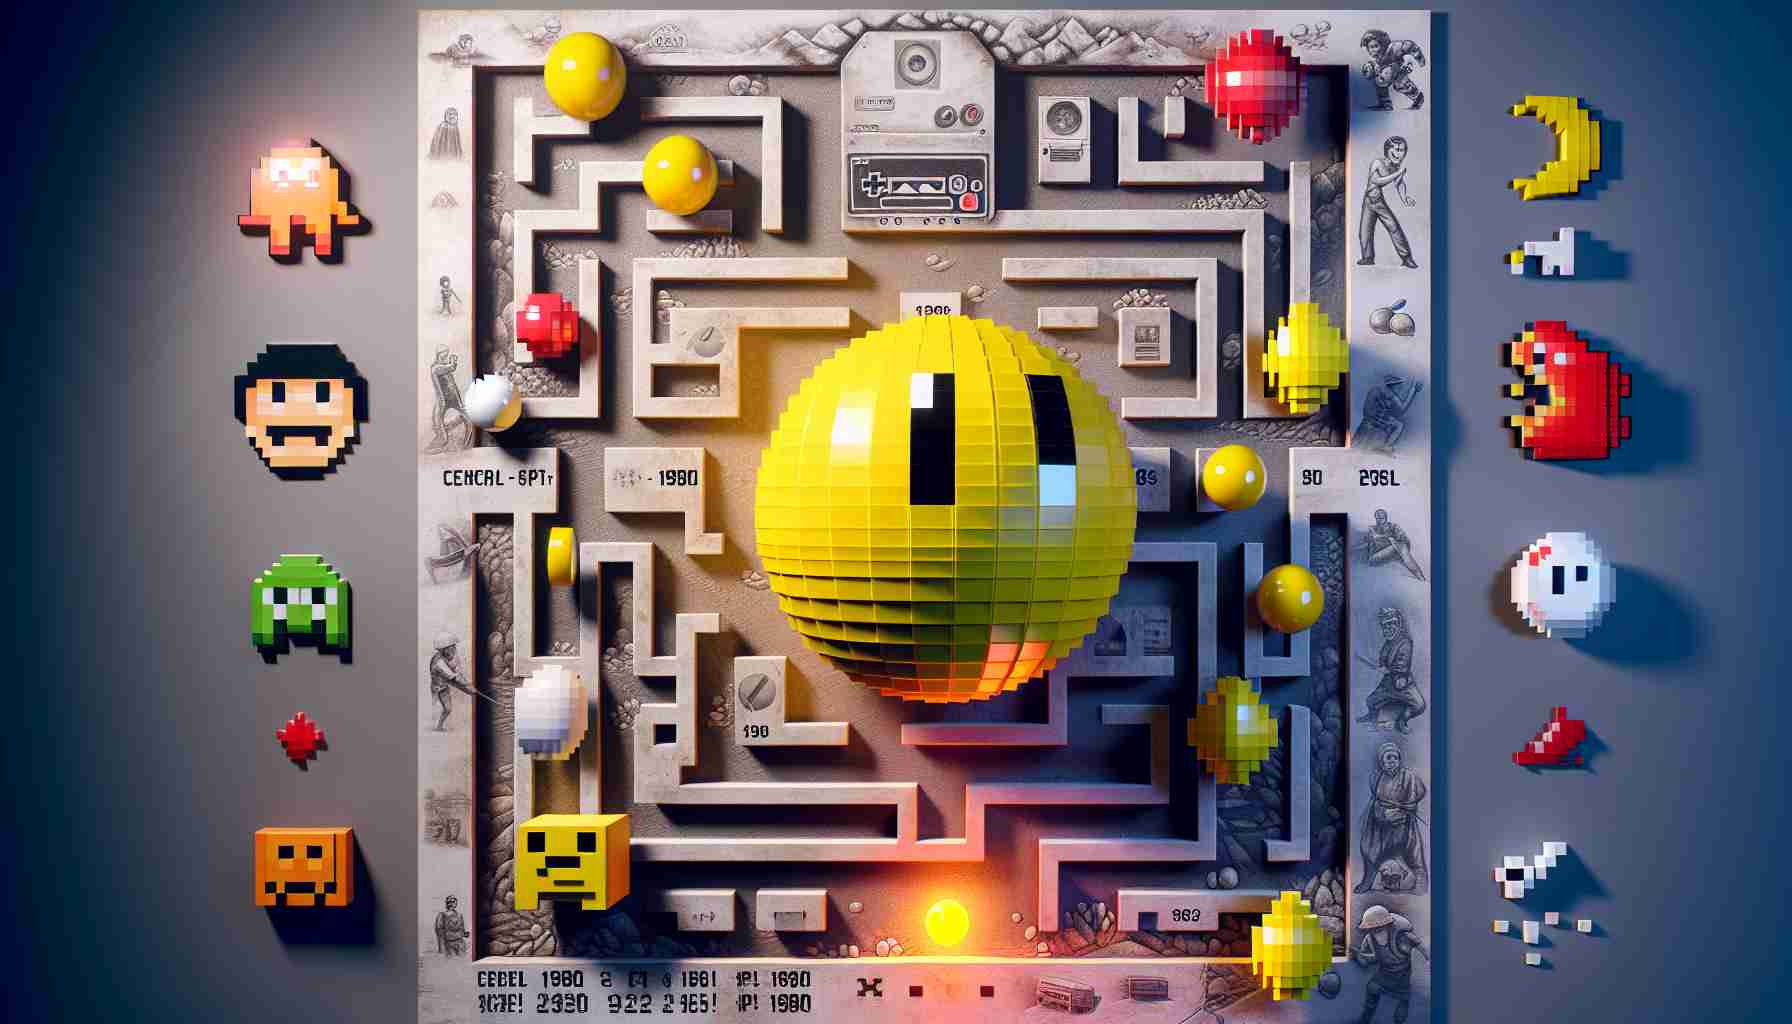 Interactive Google Doodle Celebrates Pac-Man's 30th